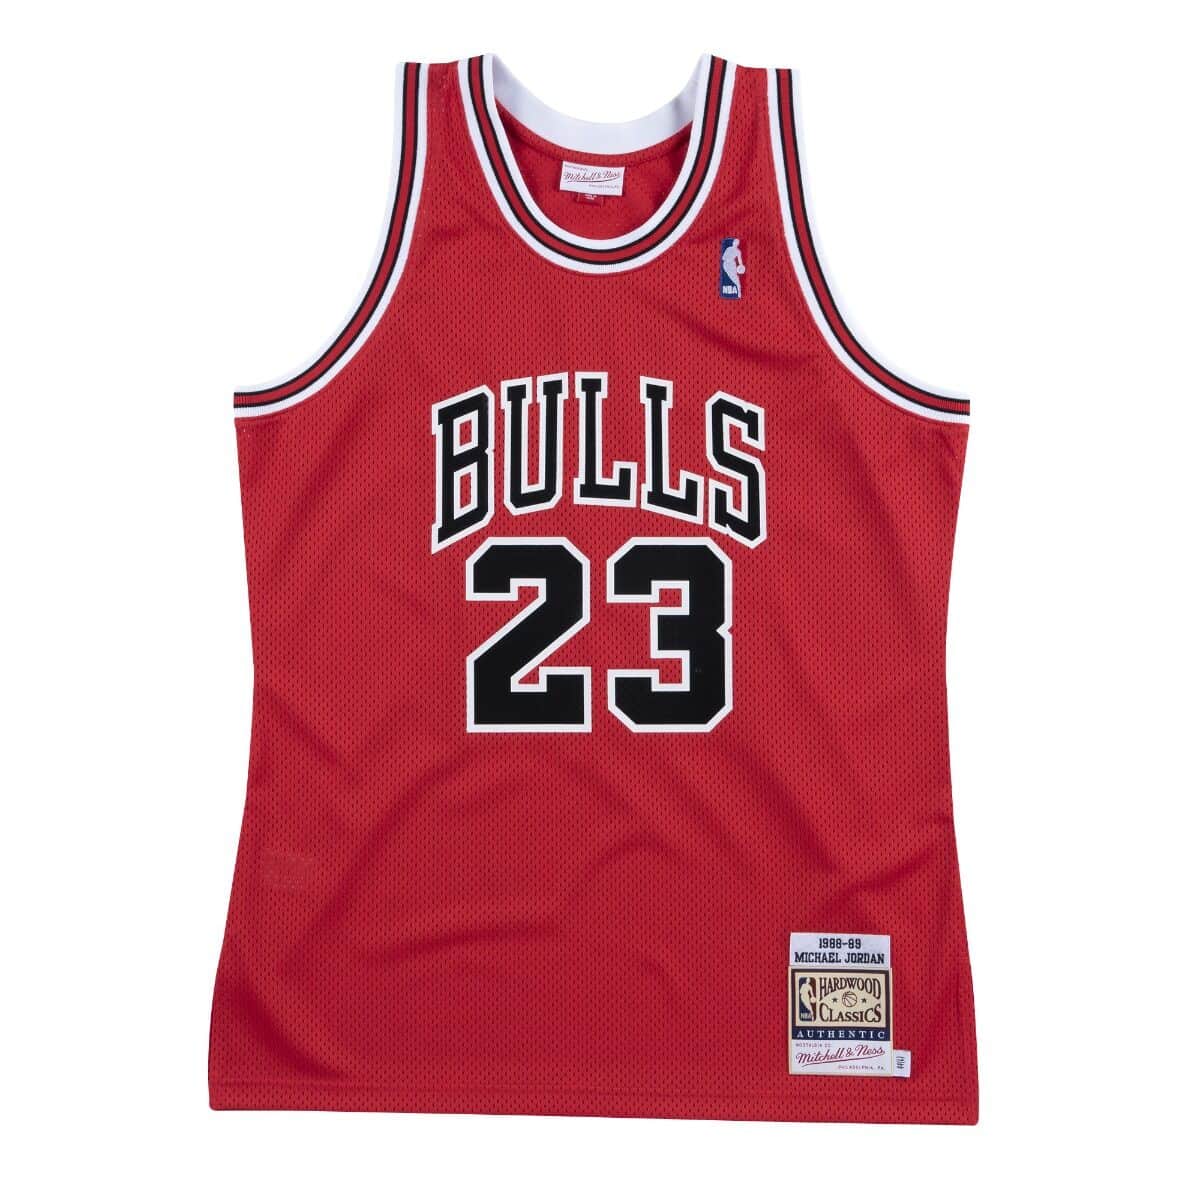 Jersey Chicago Bulls 1988-89 Michael Jordan